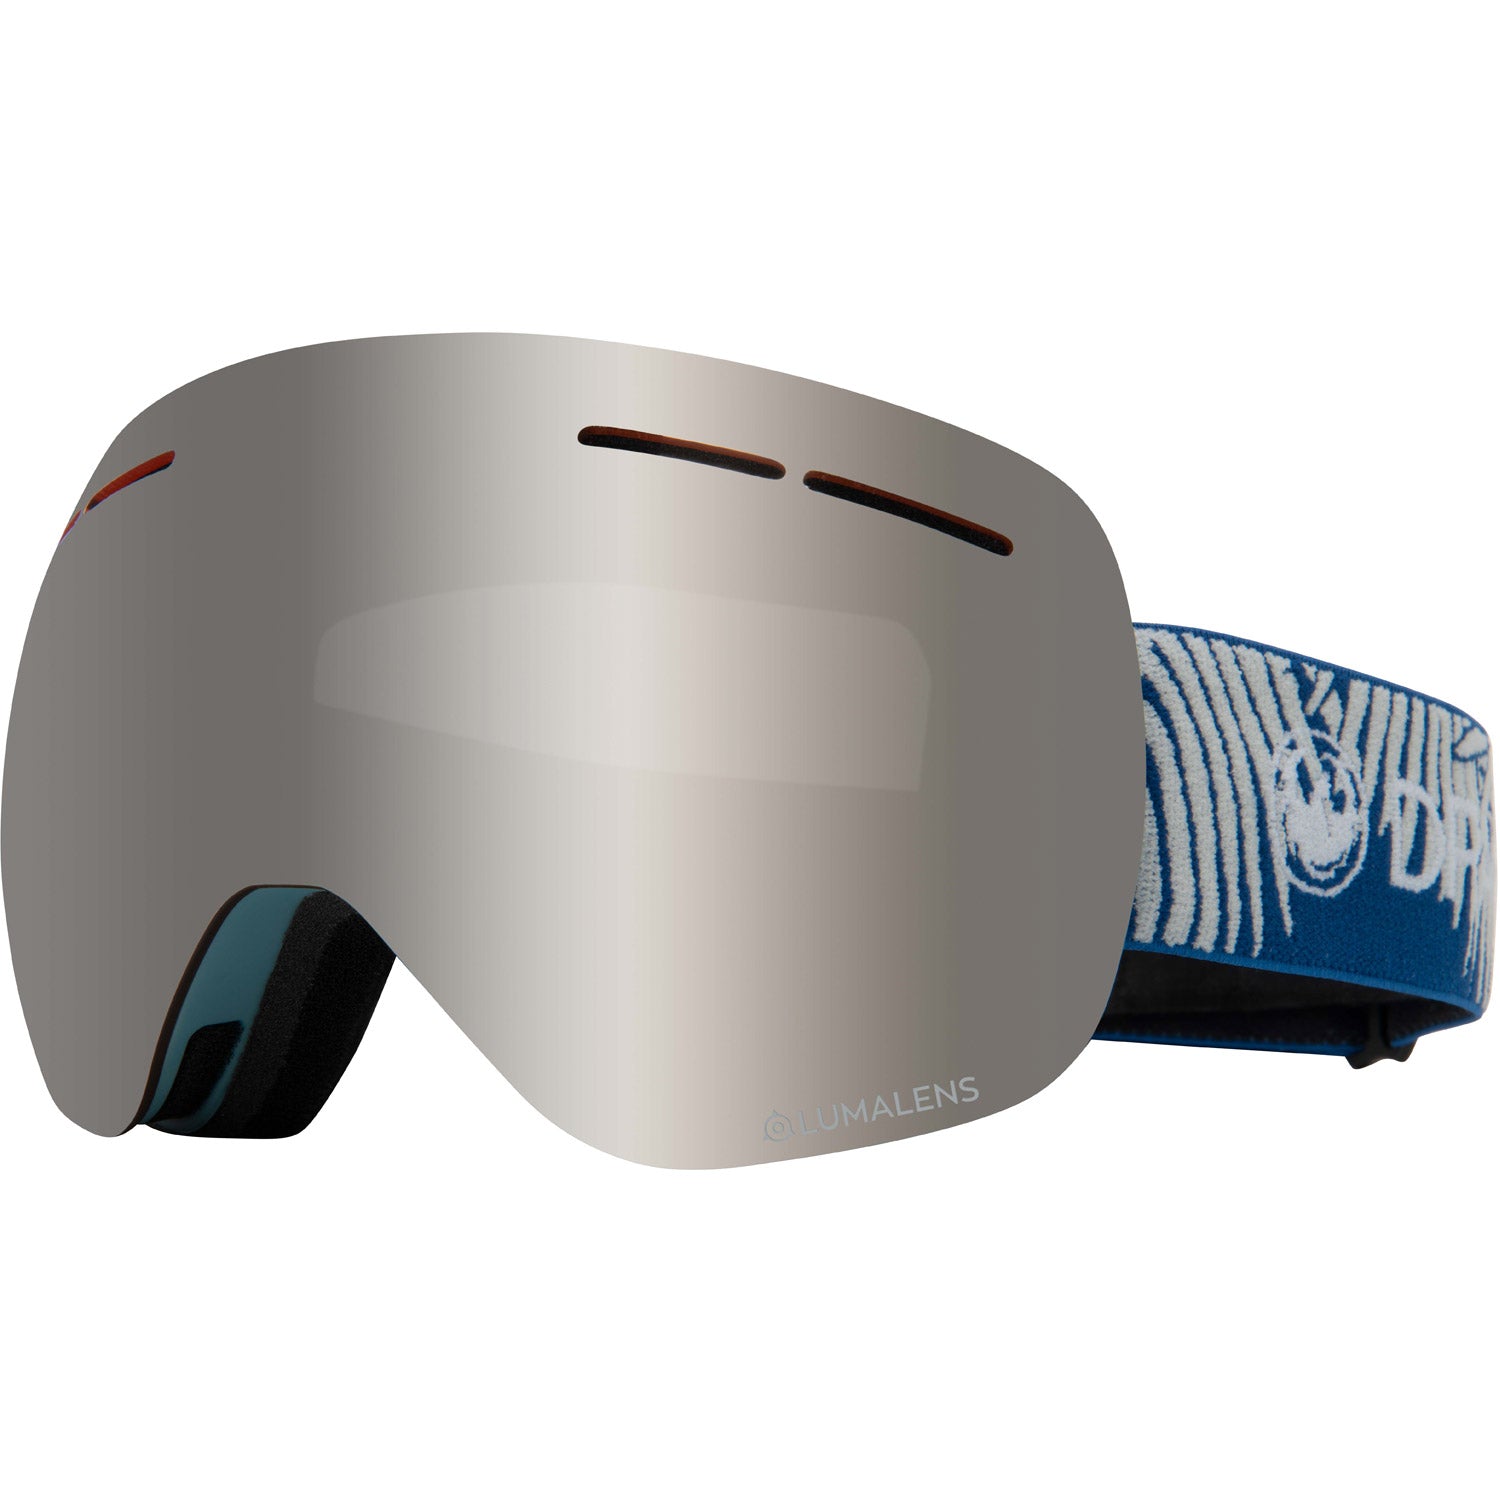 Dragon X1s Goggle 2020 Blush - Lumalens Pink Ion w/ Lumalens Dark Smoke Lens